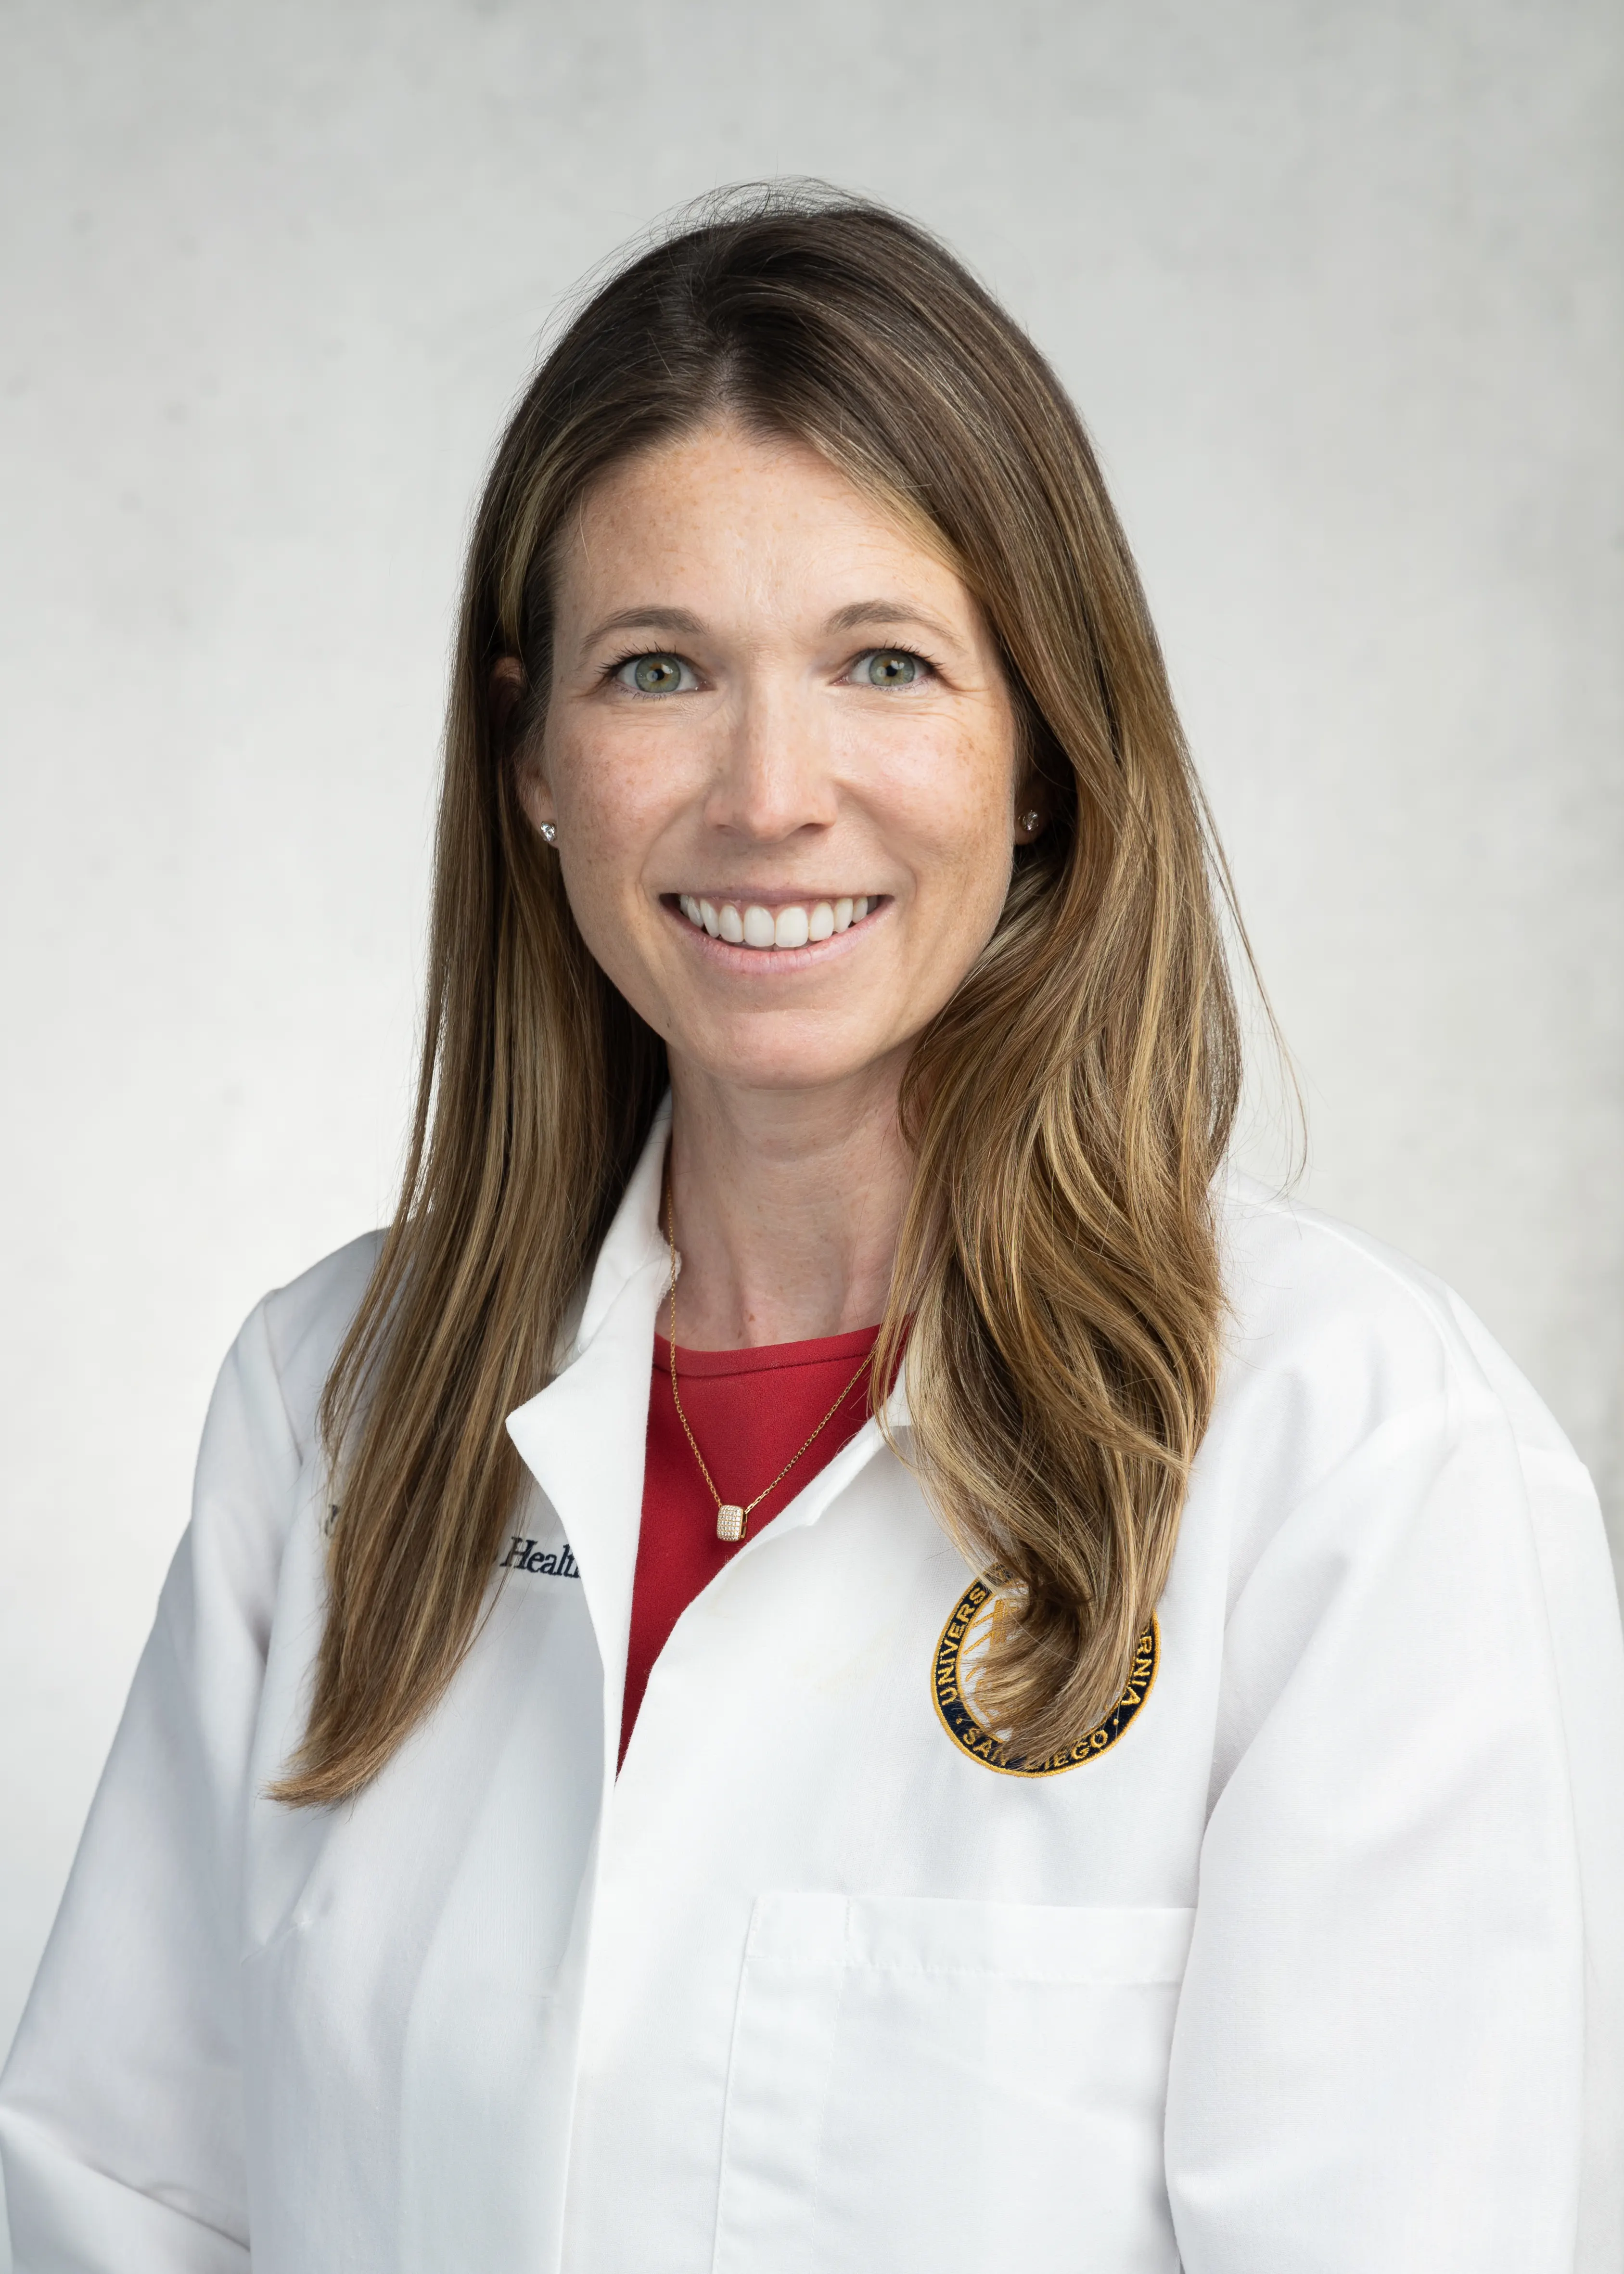 Hilary Shapiro, MD MSc